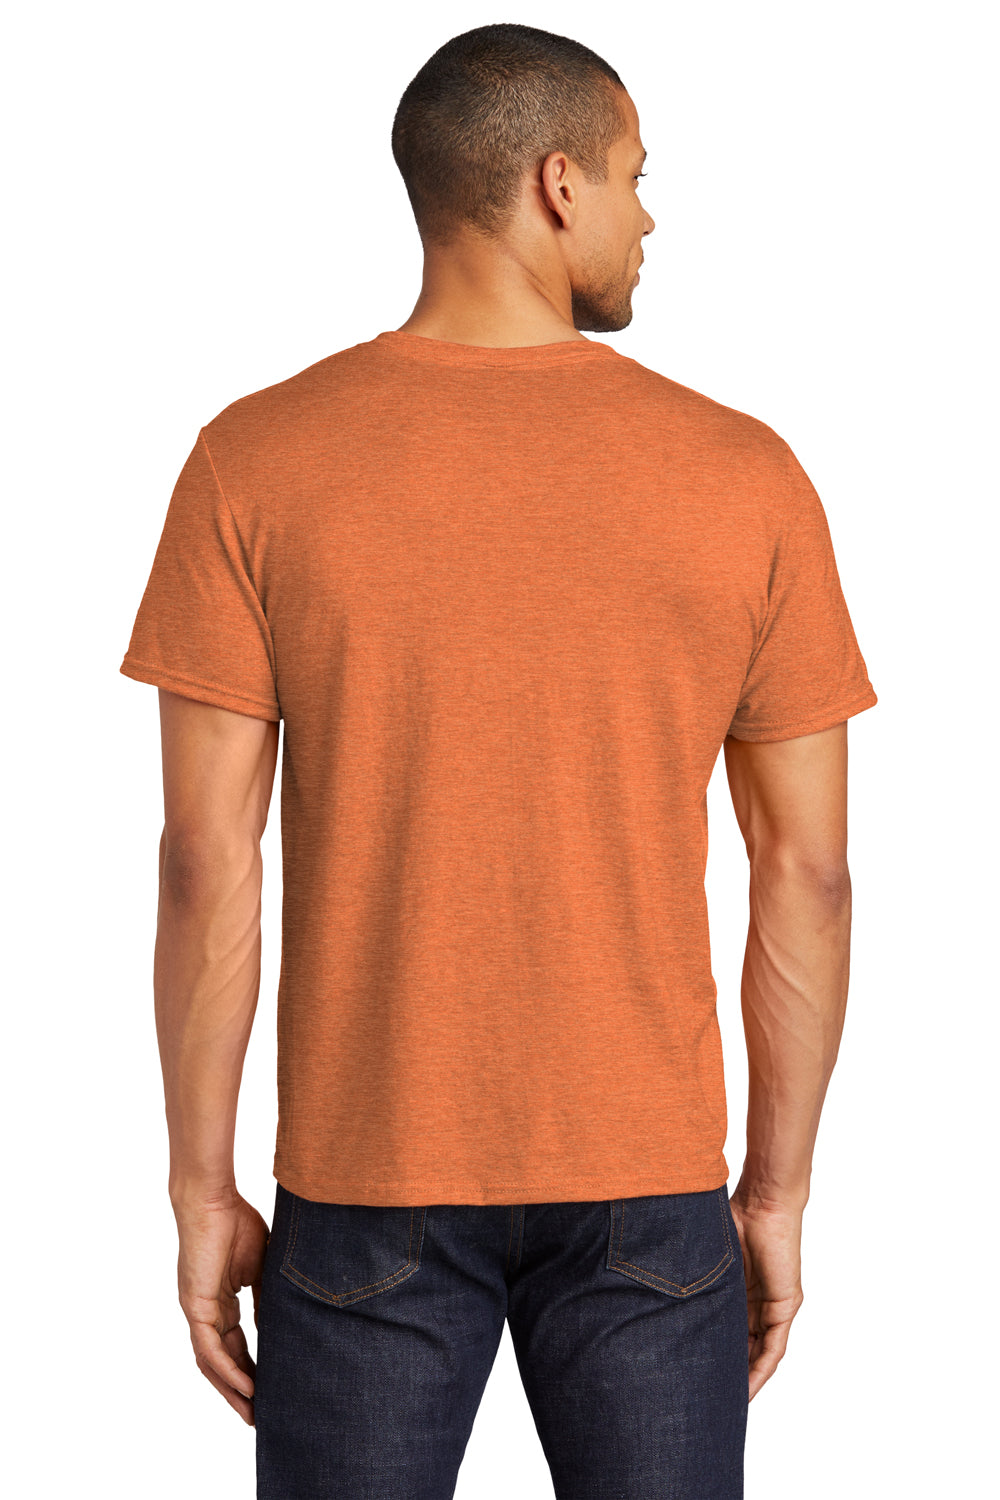 Jerzees 560M Mens Premium Blend Ring Spun Short Sleeve Crewneck T-Shirt Heather Vintage Orange Back